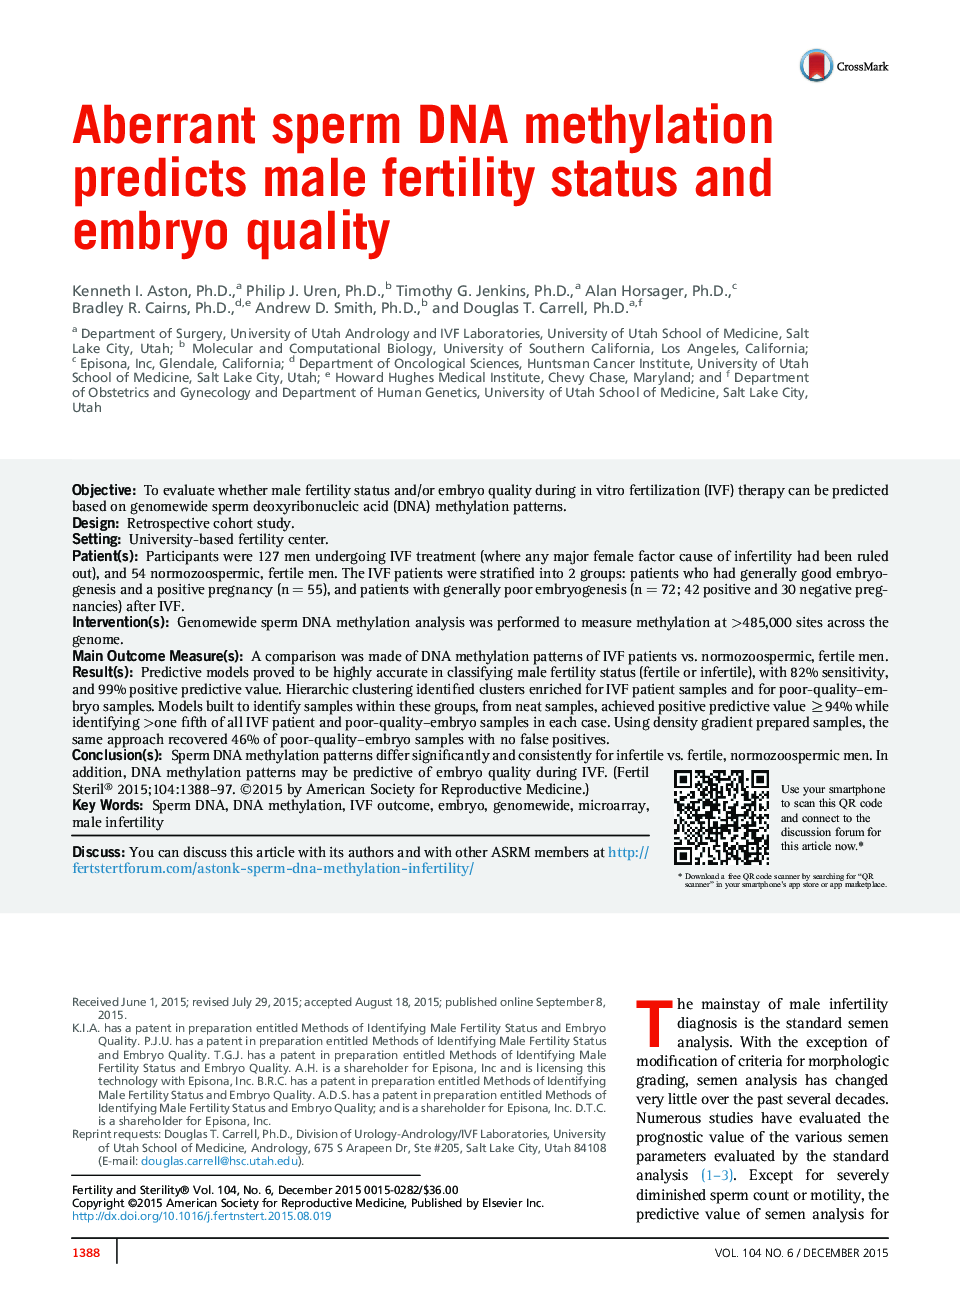 Aberrant sperm DNA methylation predicts male fertility status and embryo quality